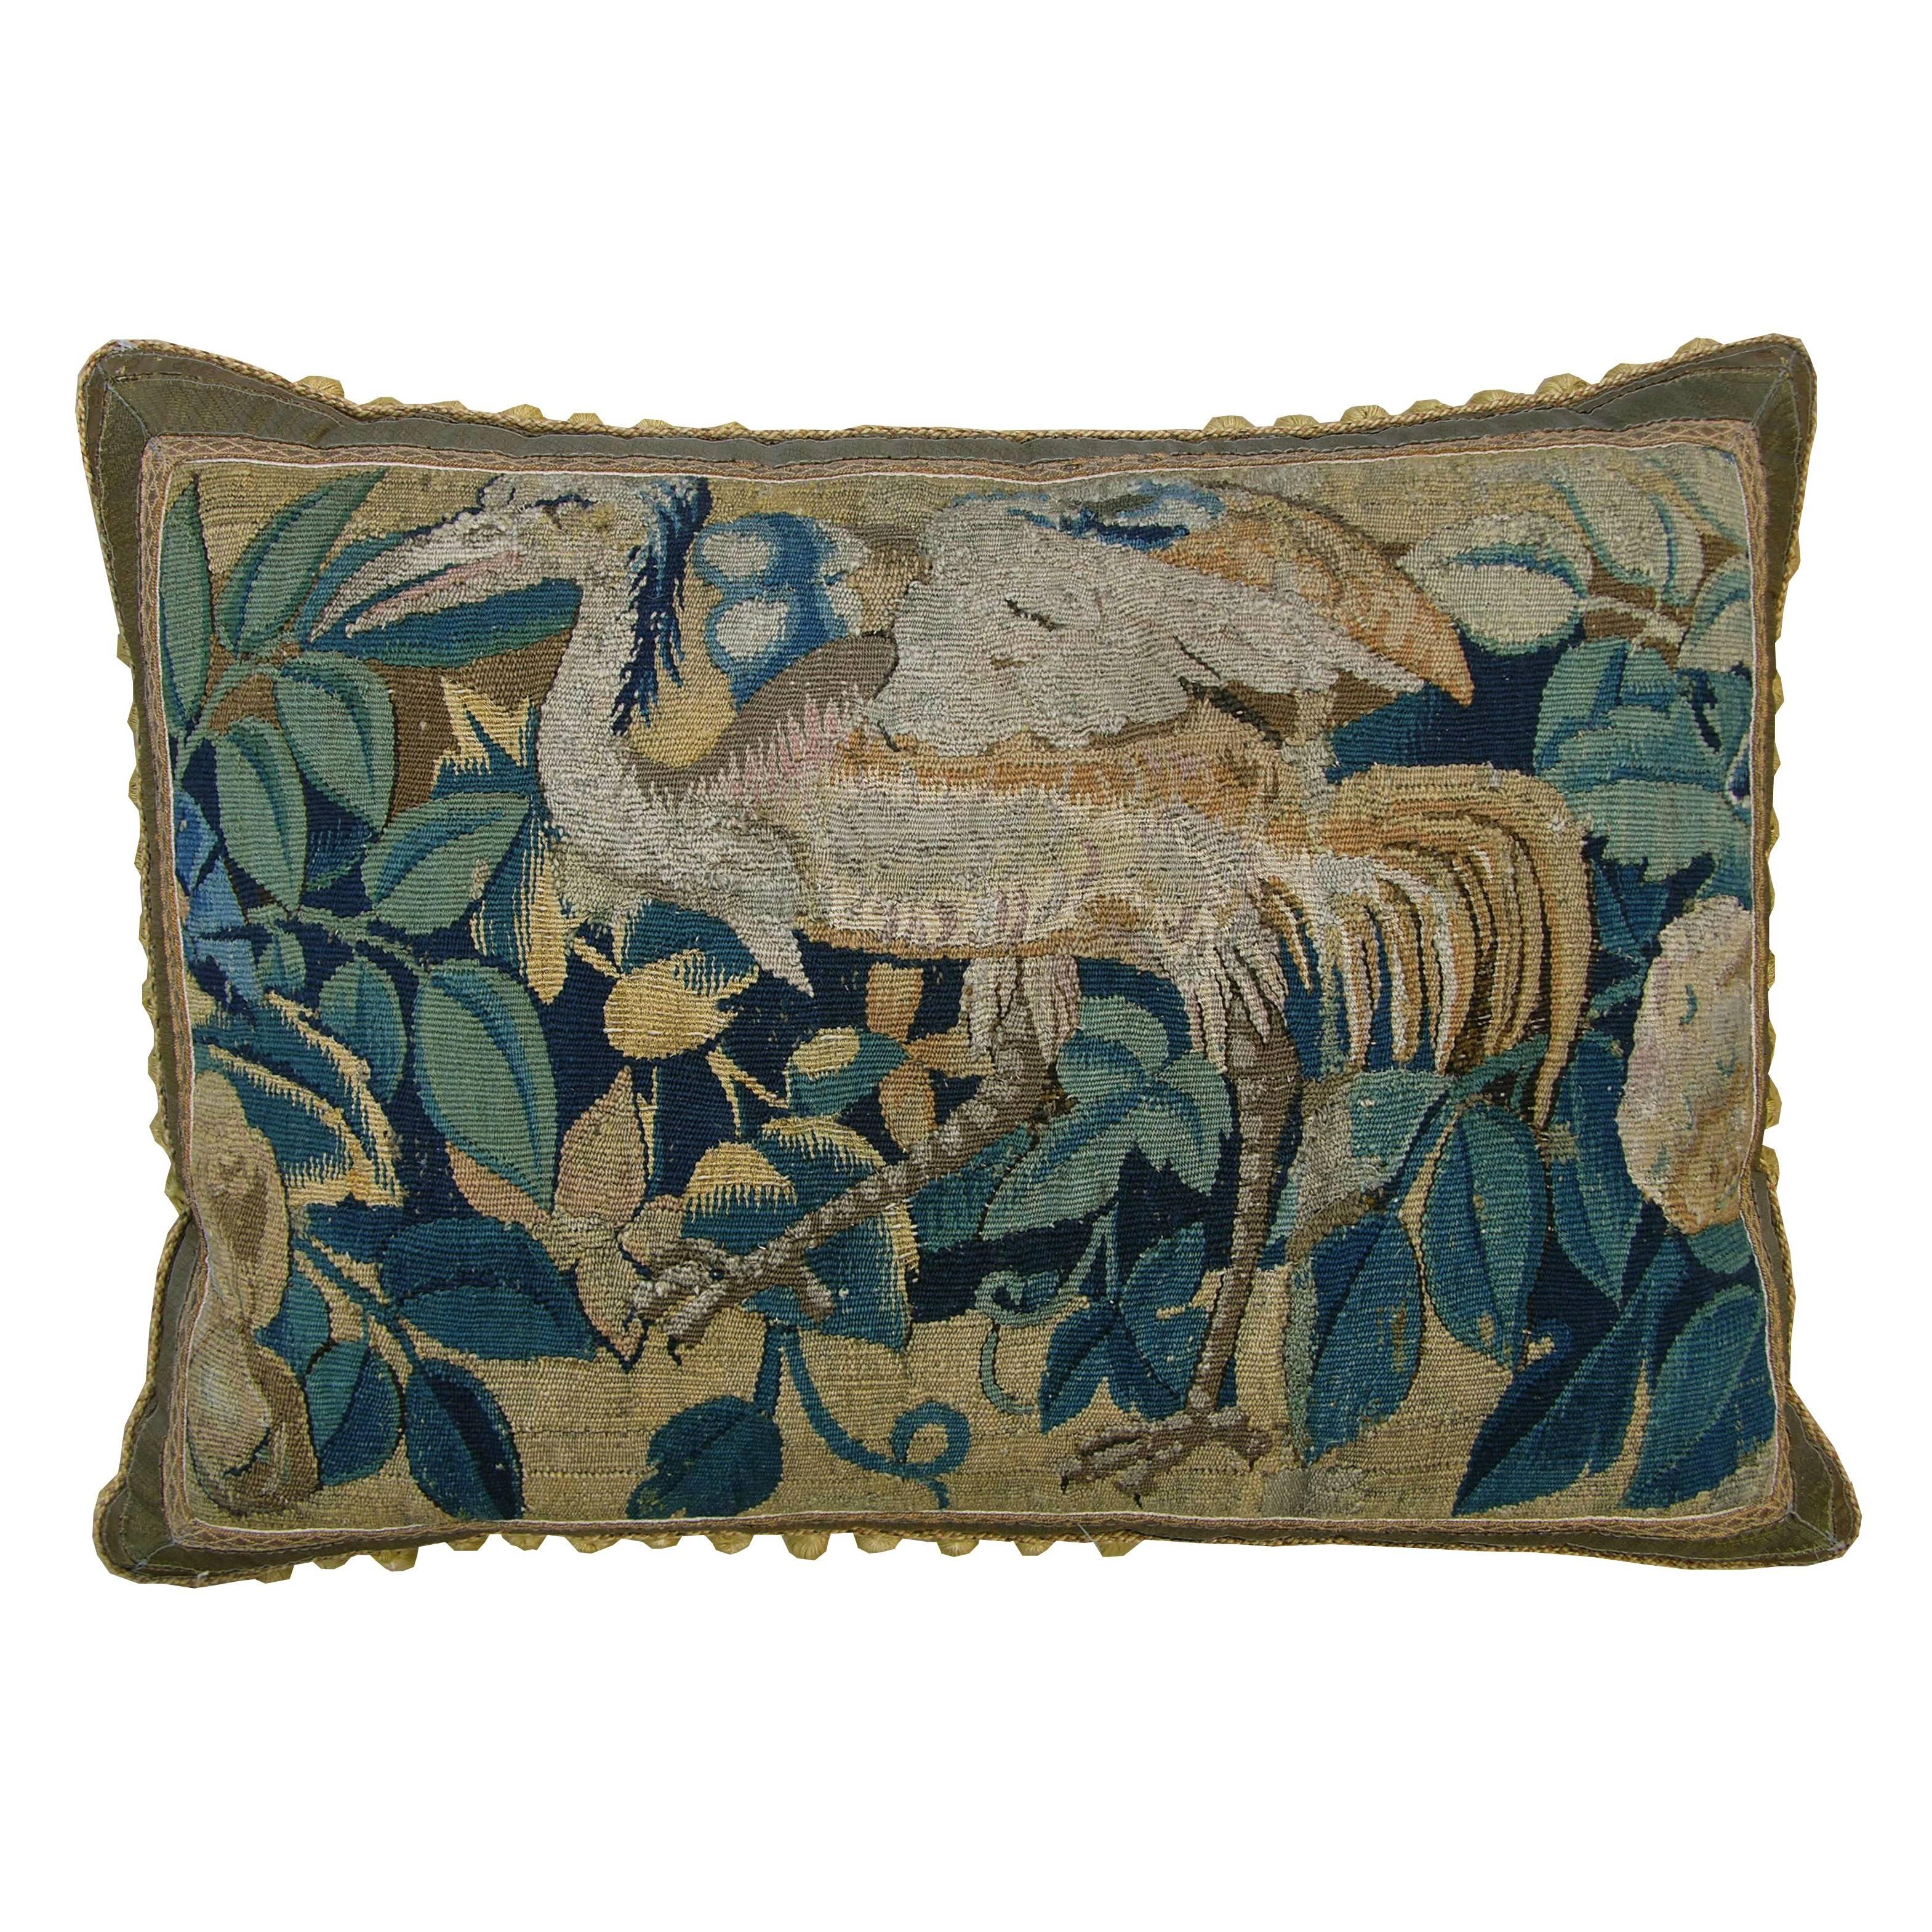 Antique Flemish Tapestry Pillow, circa 1630